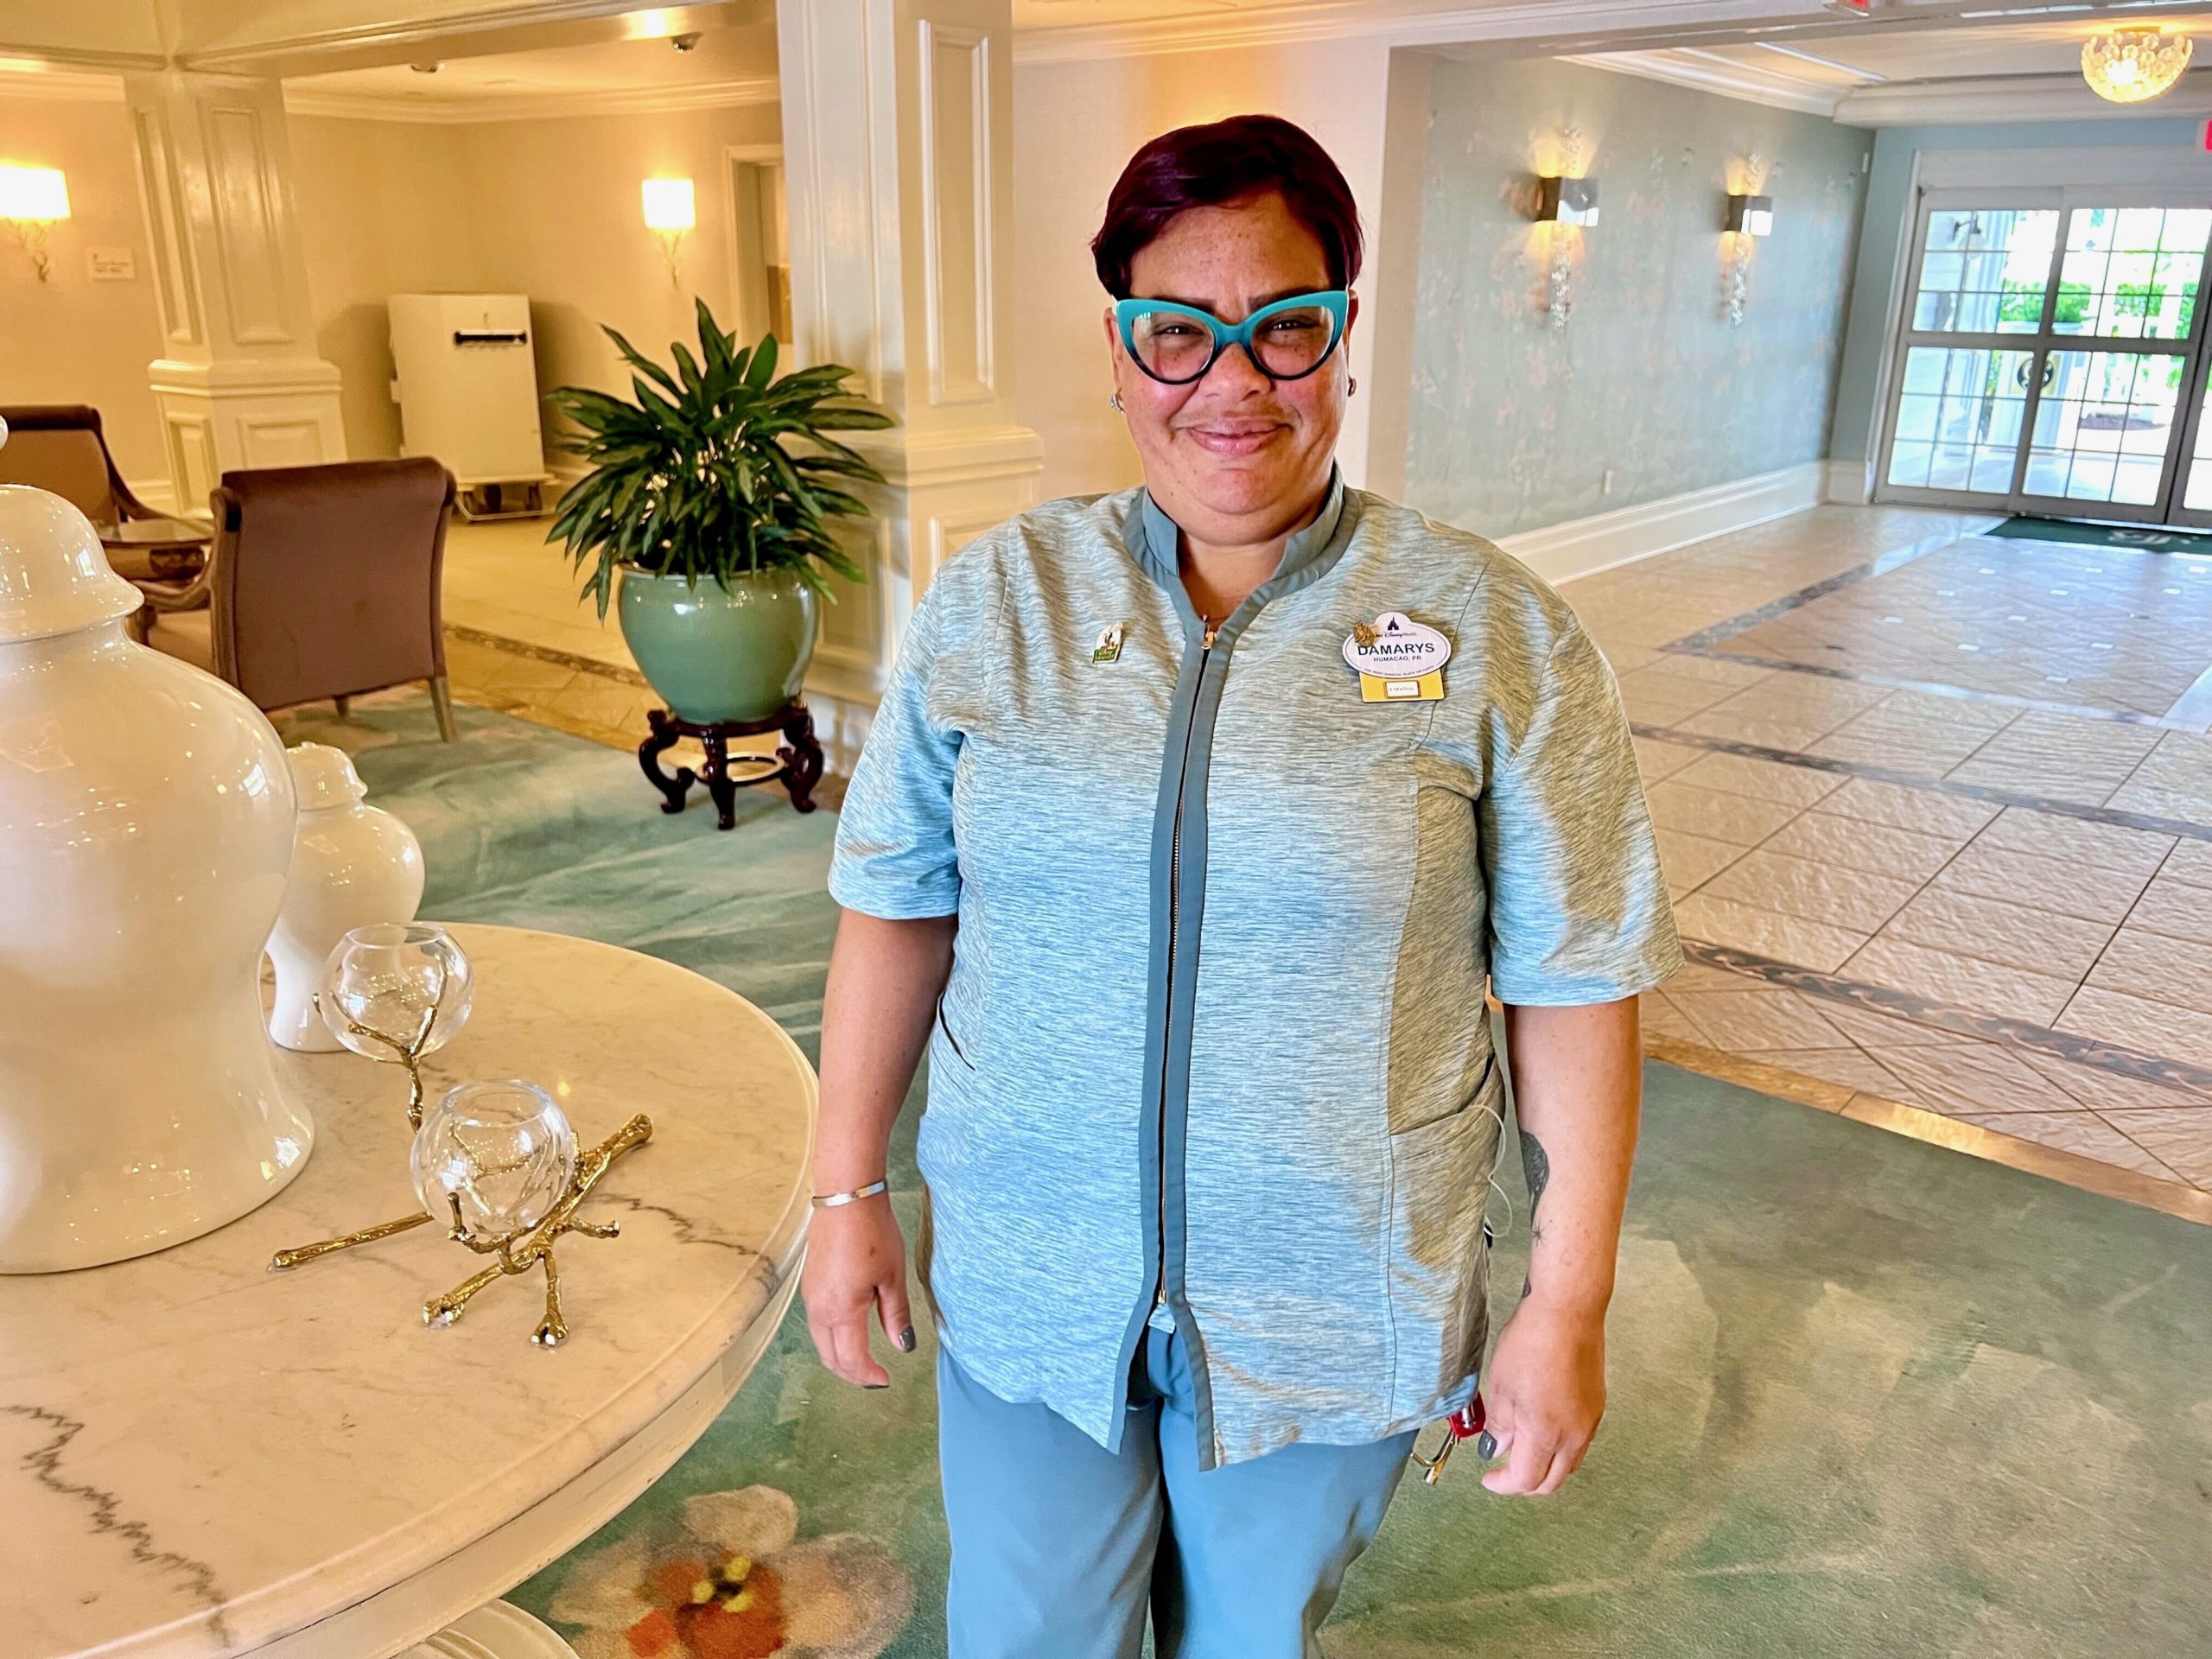 New Housekeeping Uniforms at Disney's Grand Floridian Resort & Spa